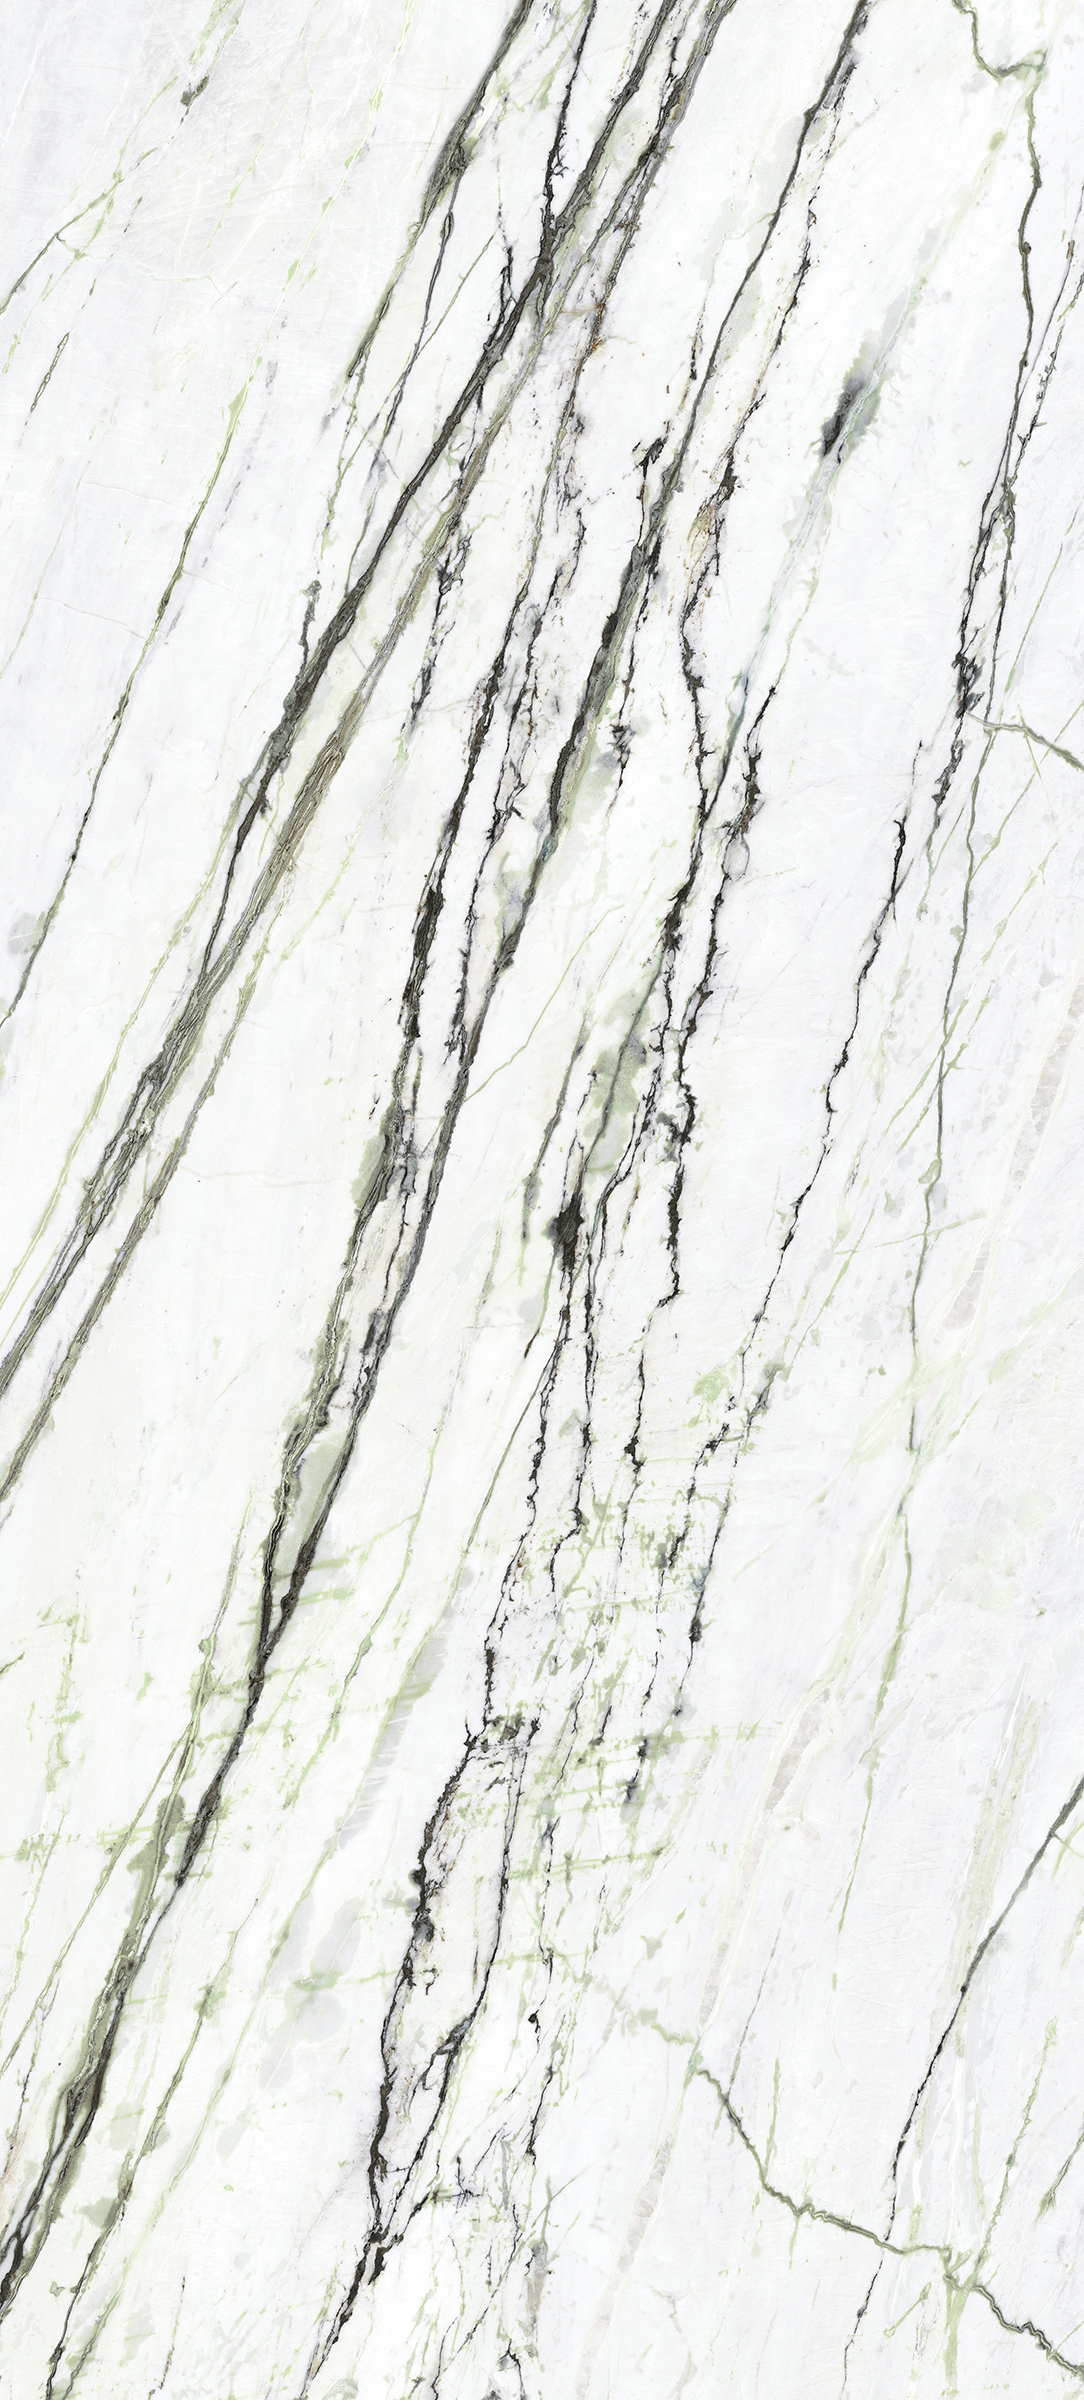 Vanezia Gres Mima Wandfliese Marmoroptik Weiß Grün Glänzend 120x280 cm rektifiziert 